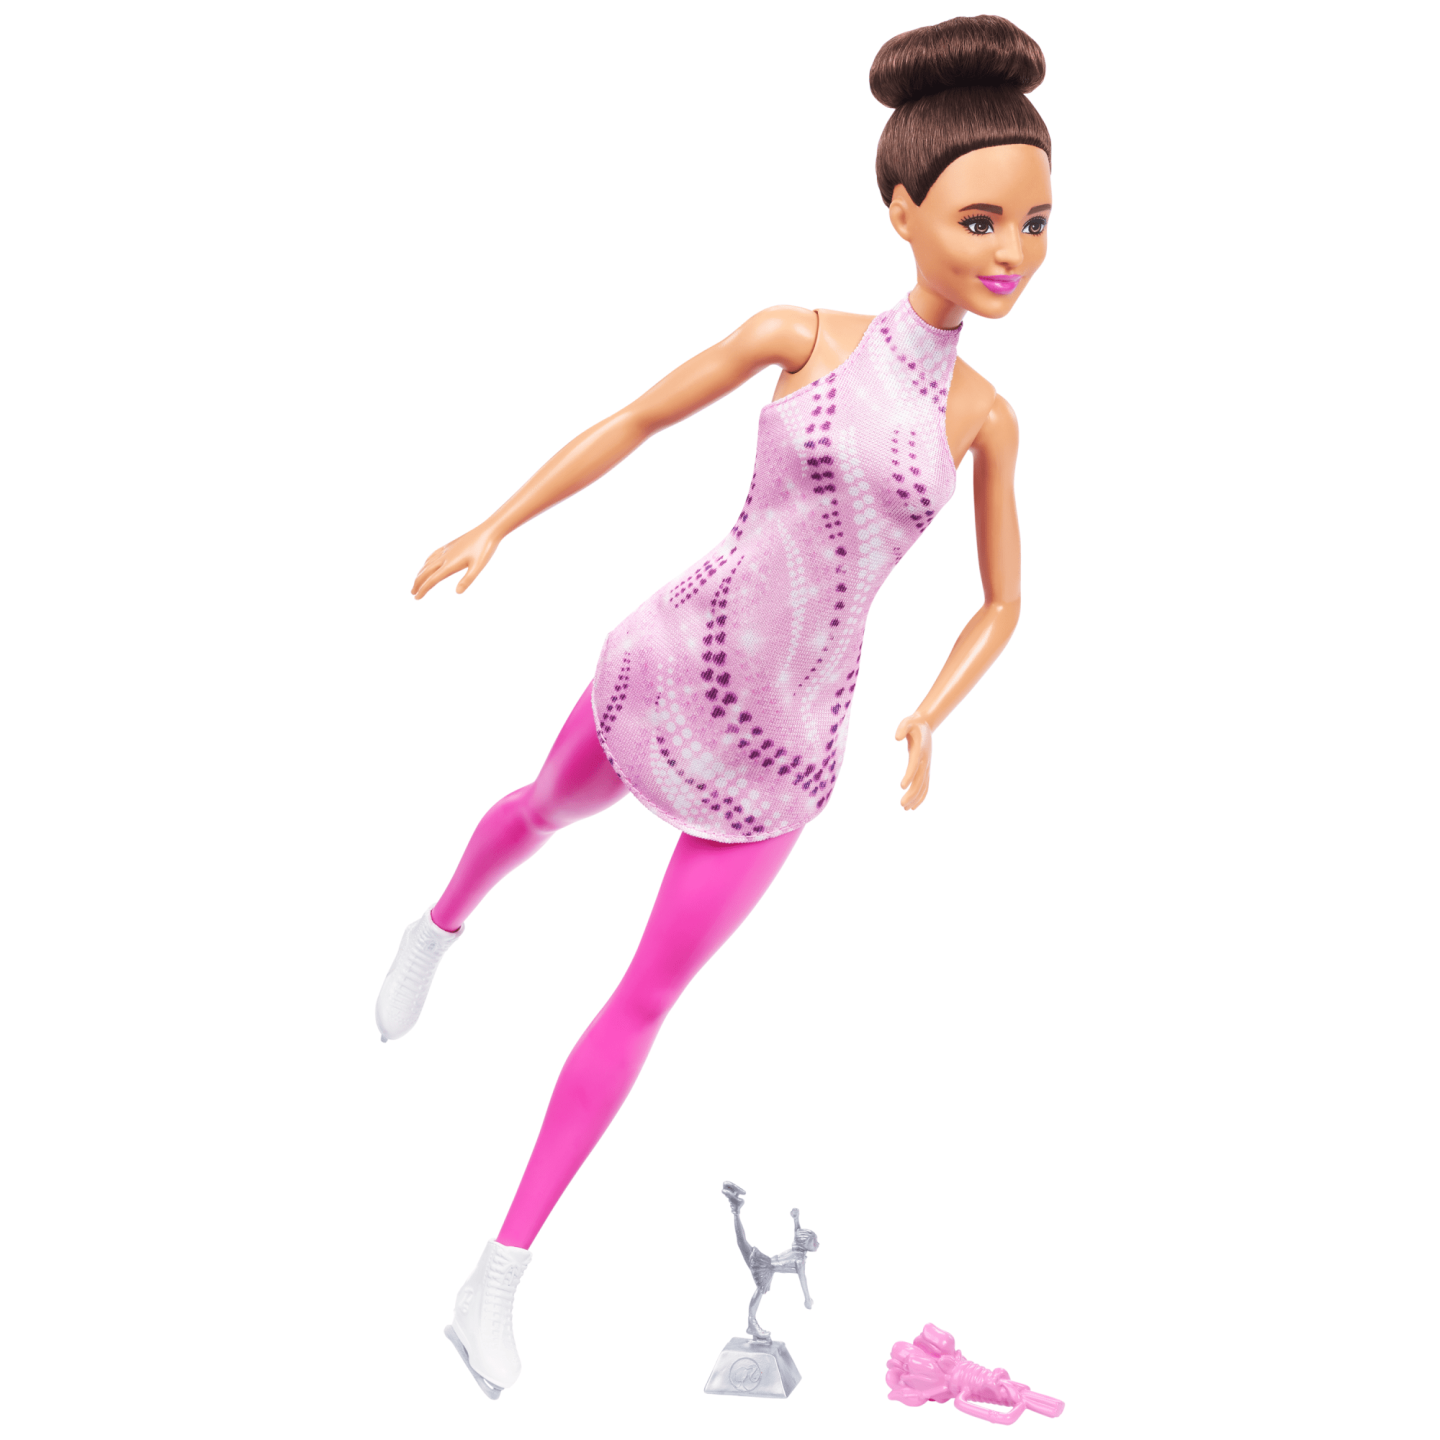 Barbie - Figure Skater Doll (HRG37)